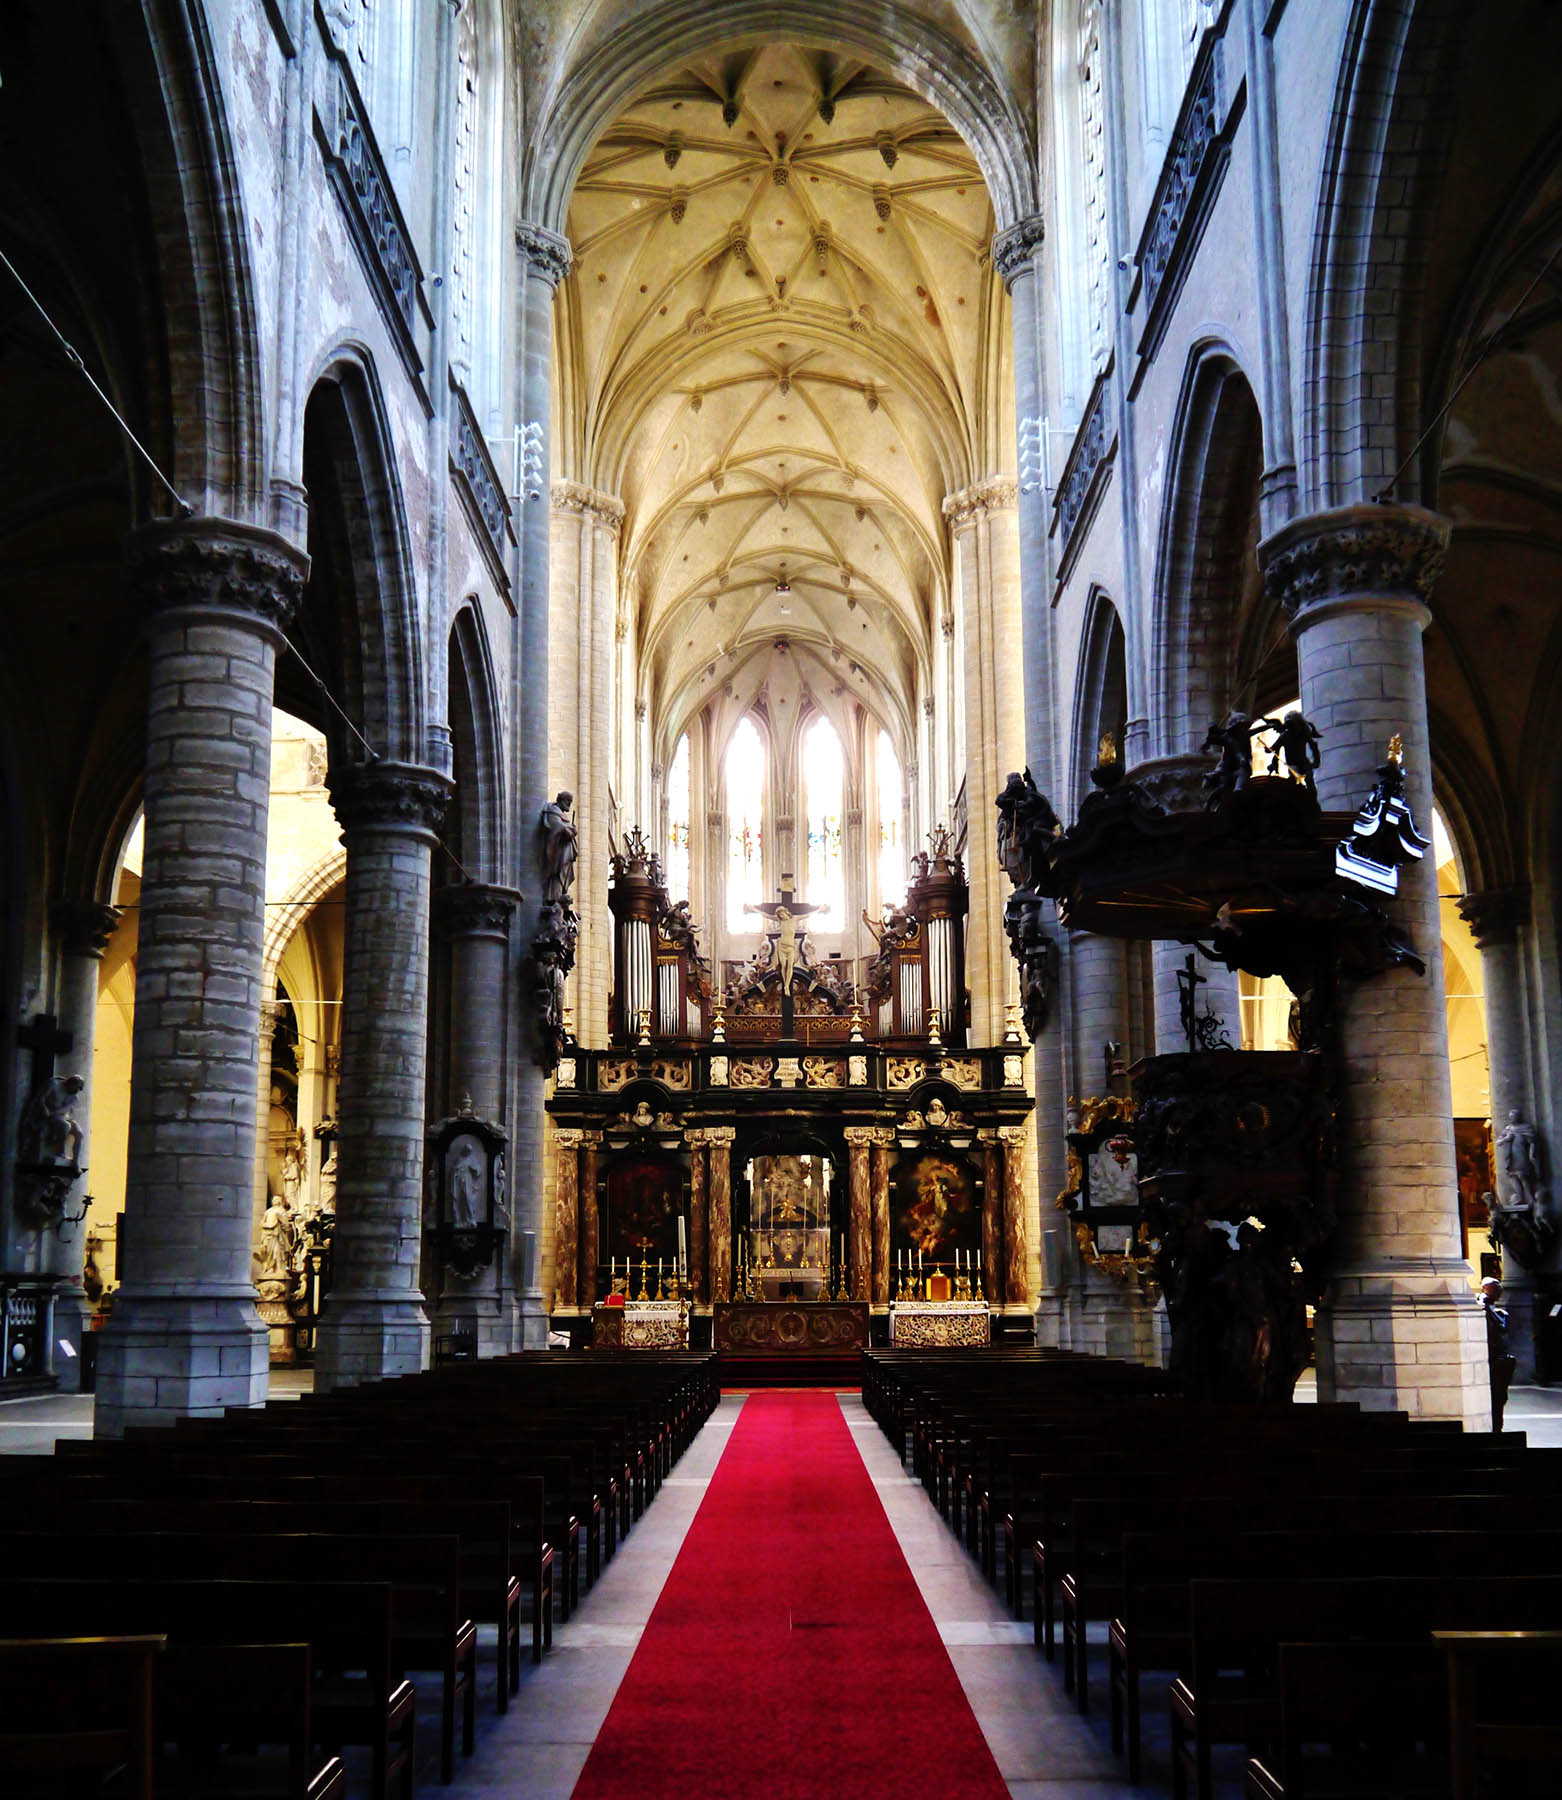 Sint-Jacobskerk in Antwerpen (interieur)